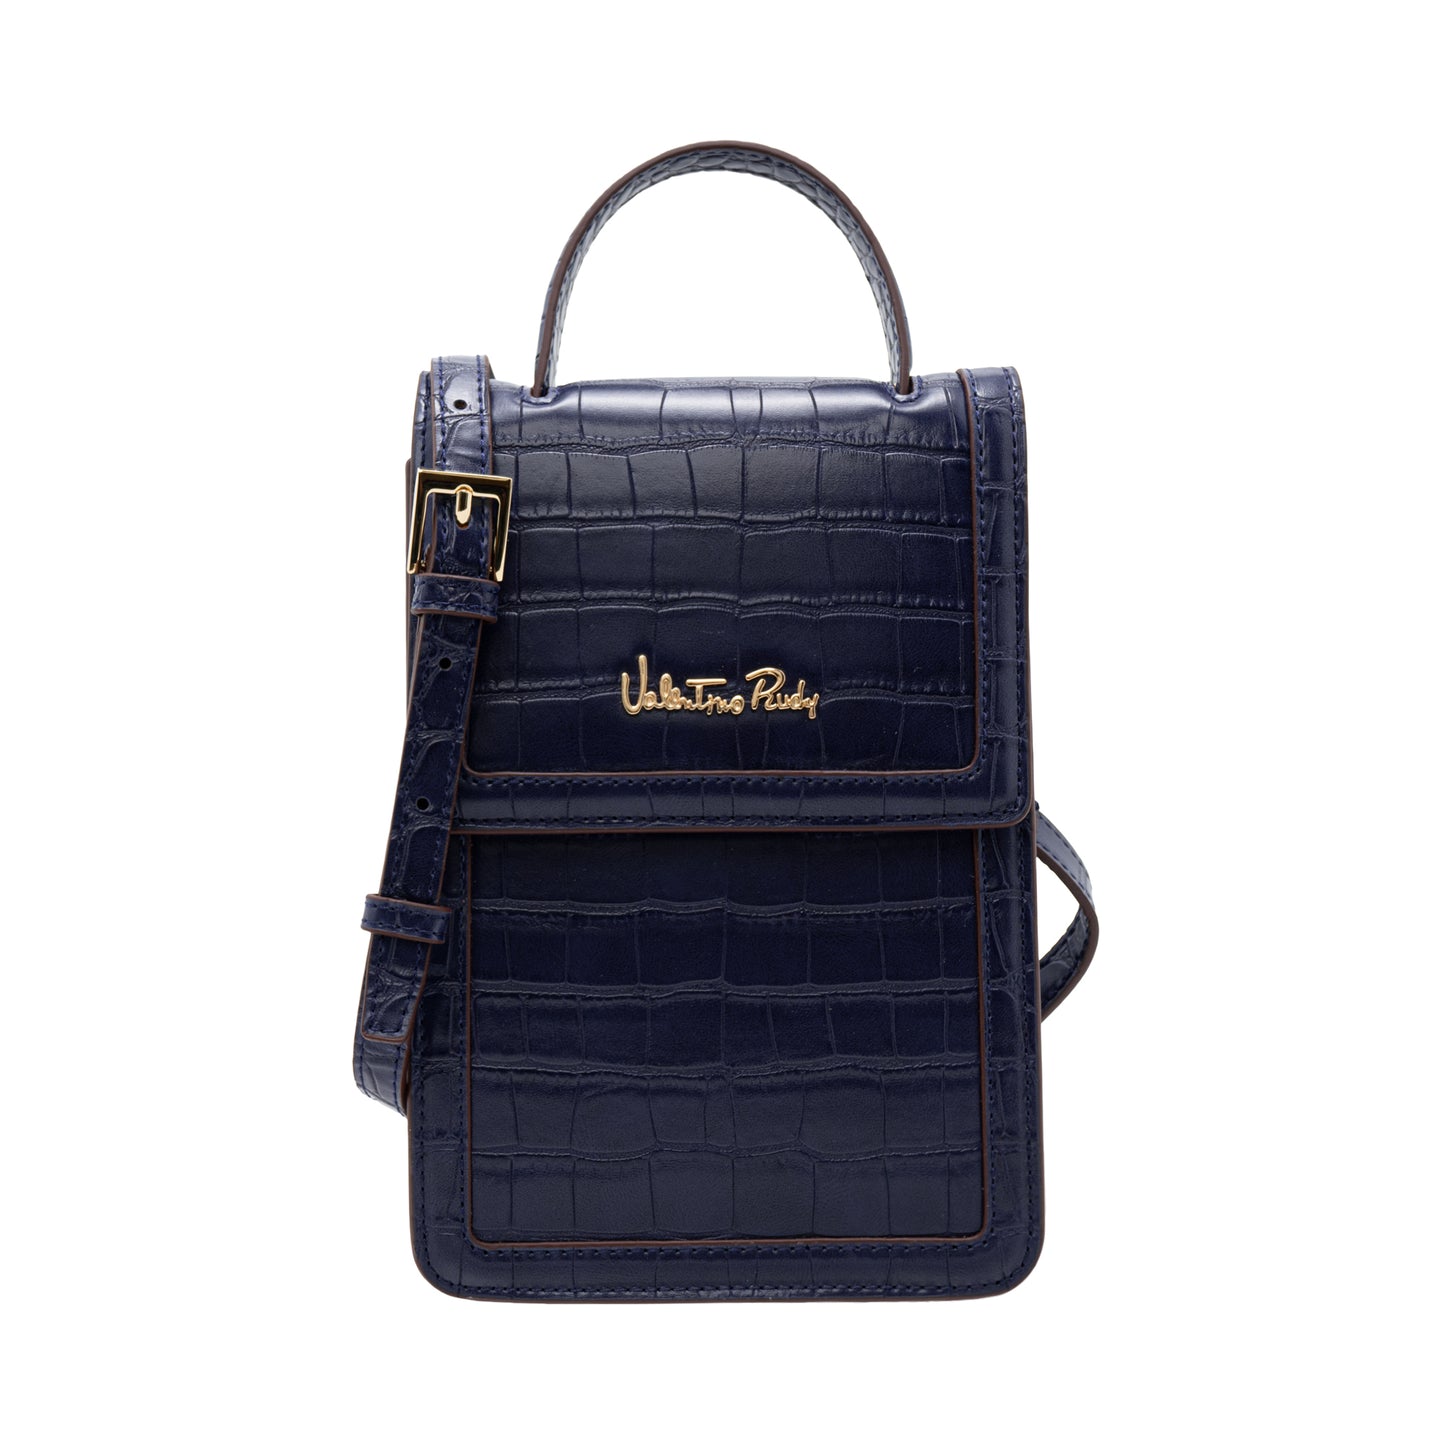 Valentino Rudy Italy Ladies Croc-Effect Top Handle Bag